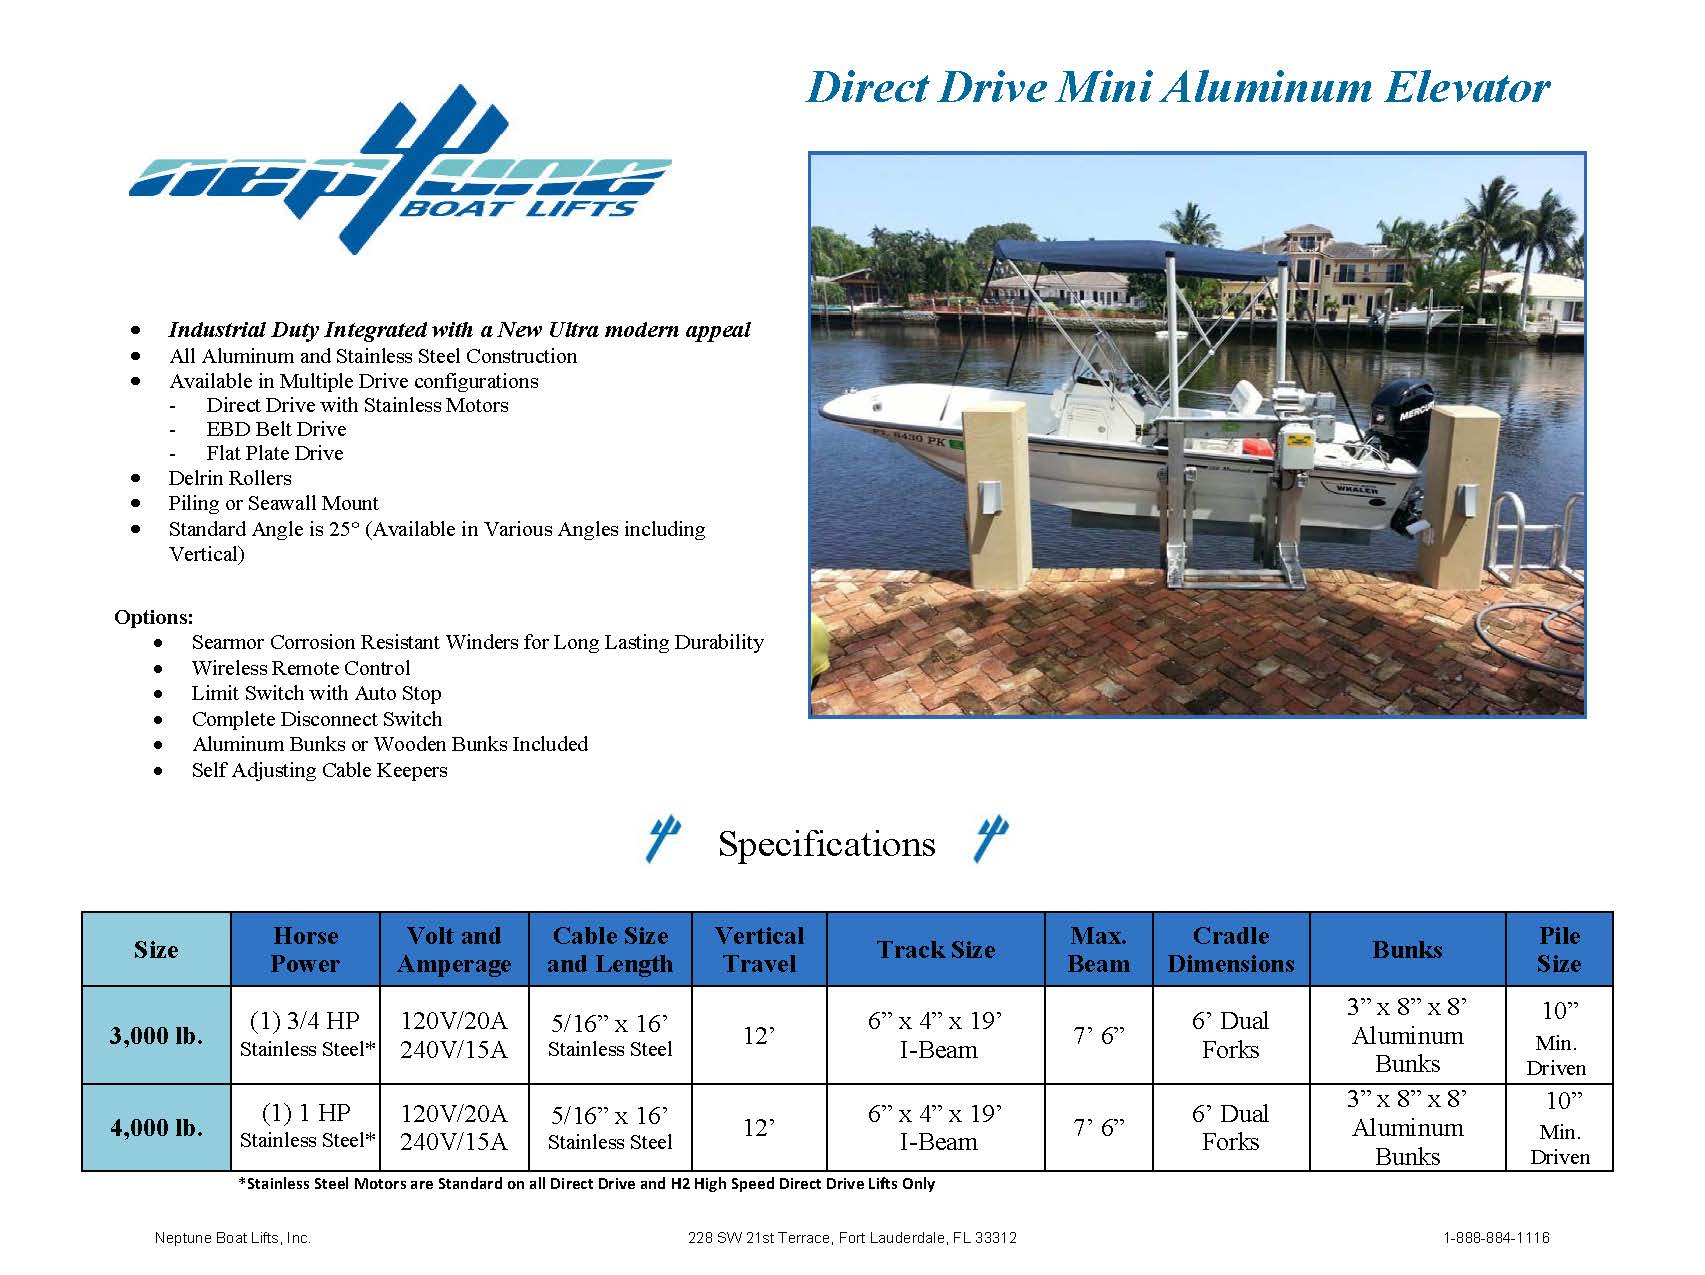 Direct drive mini aluminum elevator boat lift specification chart